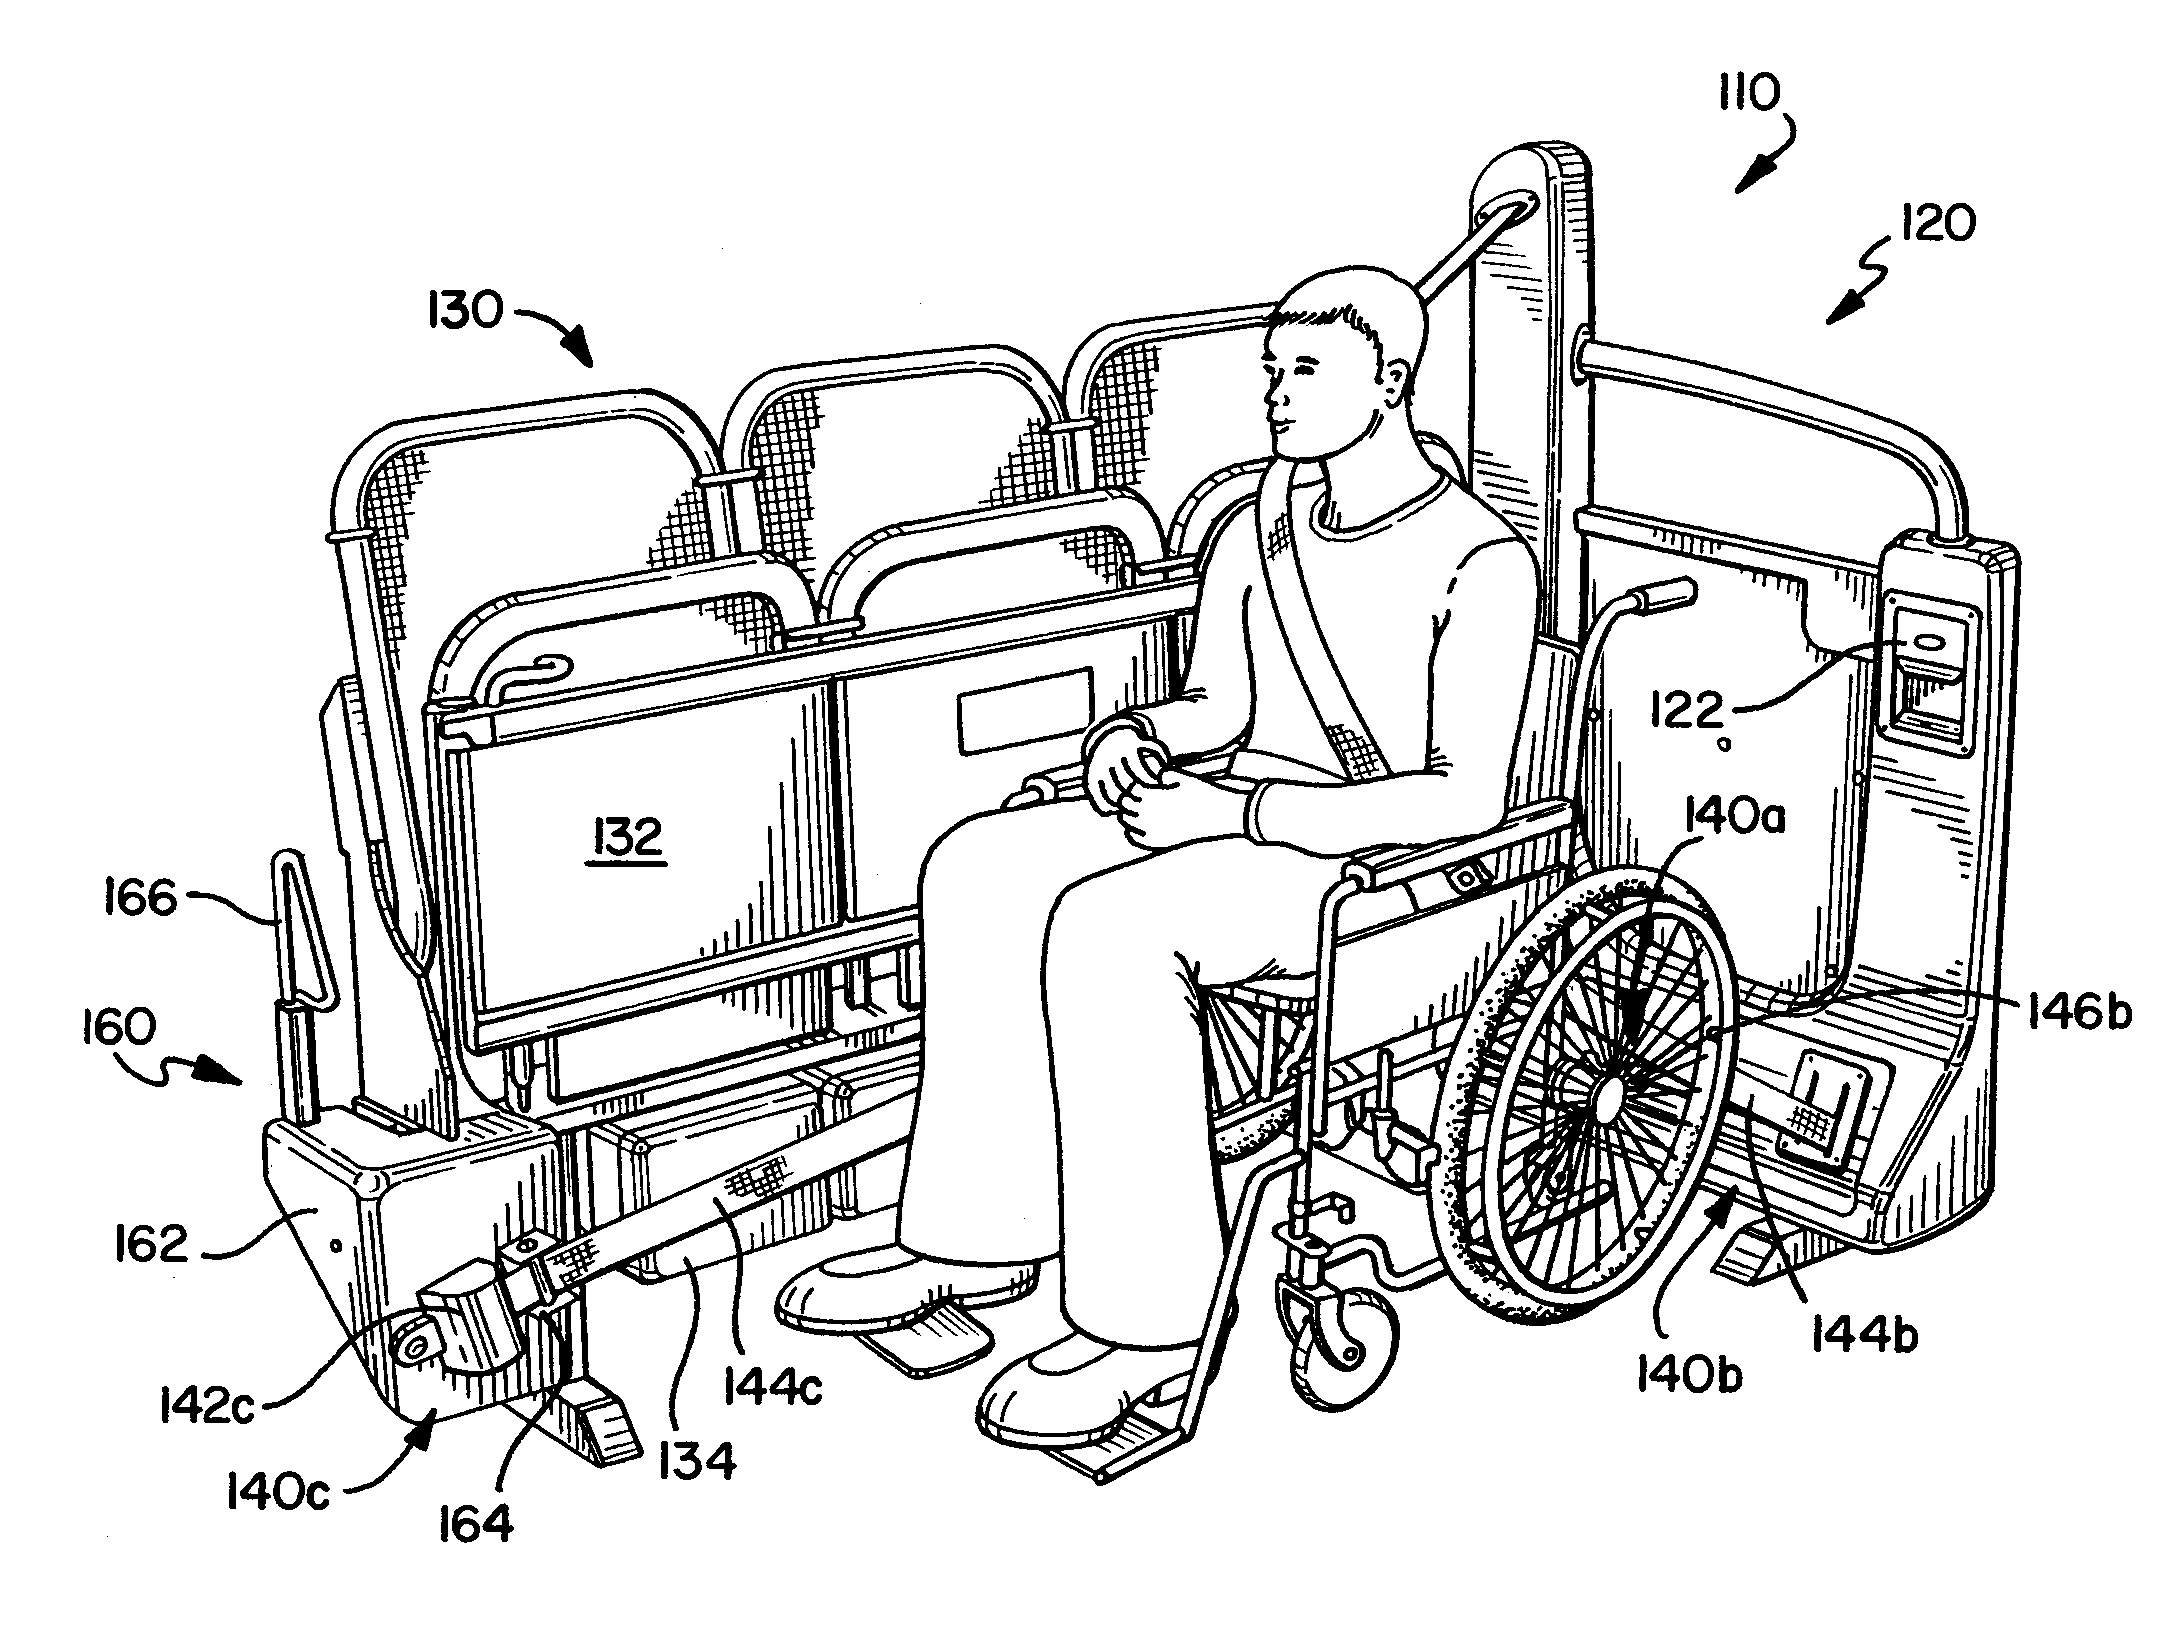 3-point wheelchair passenger securement system